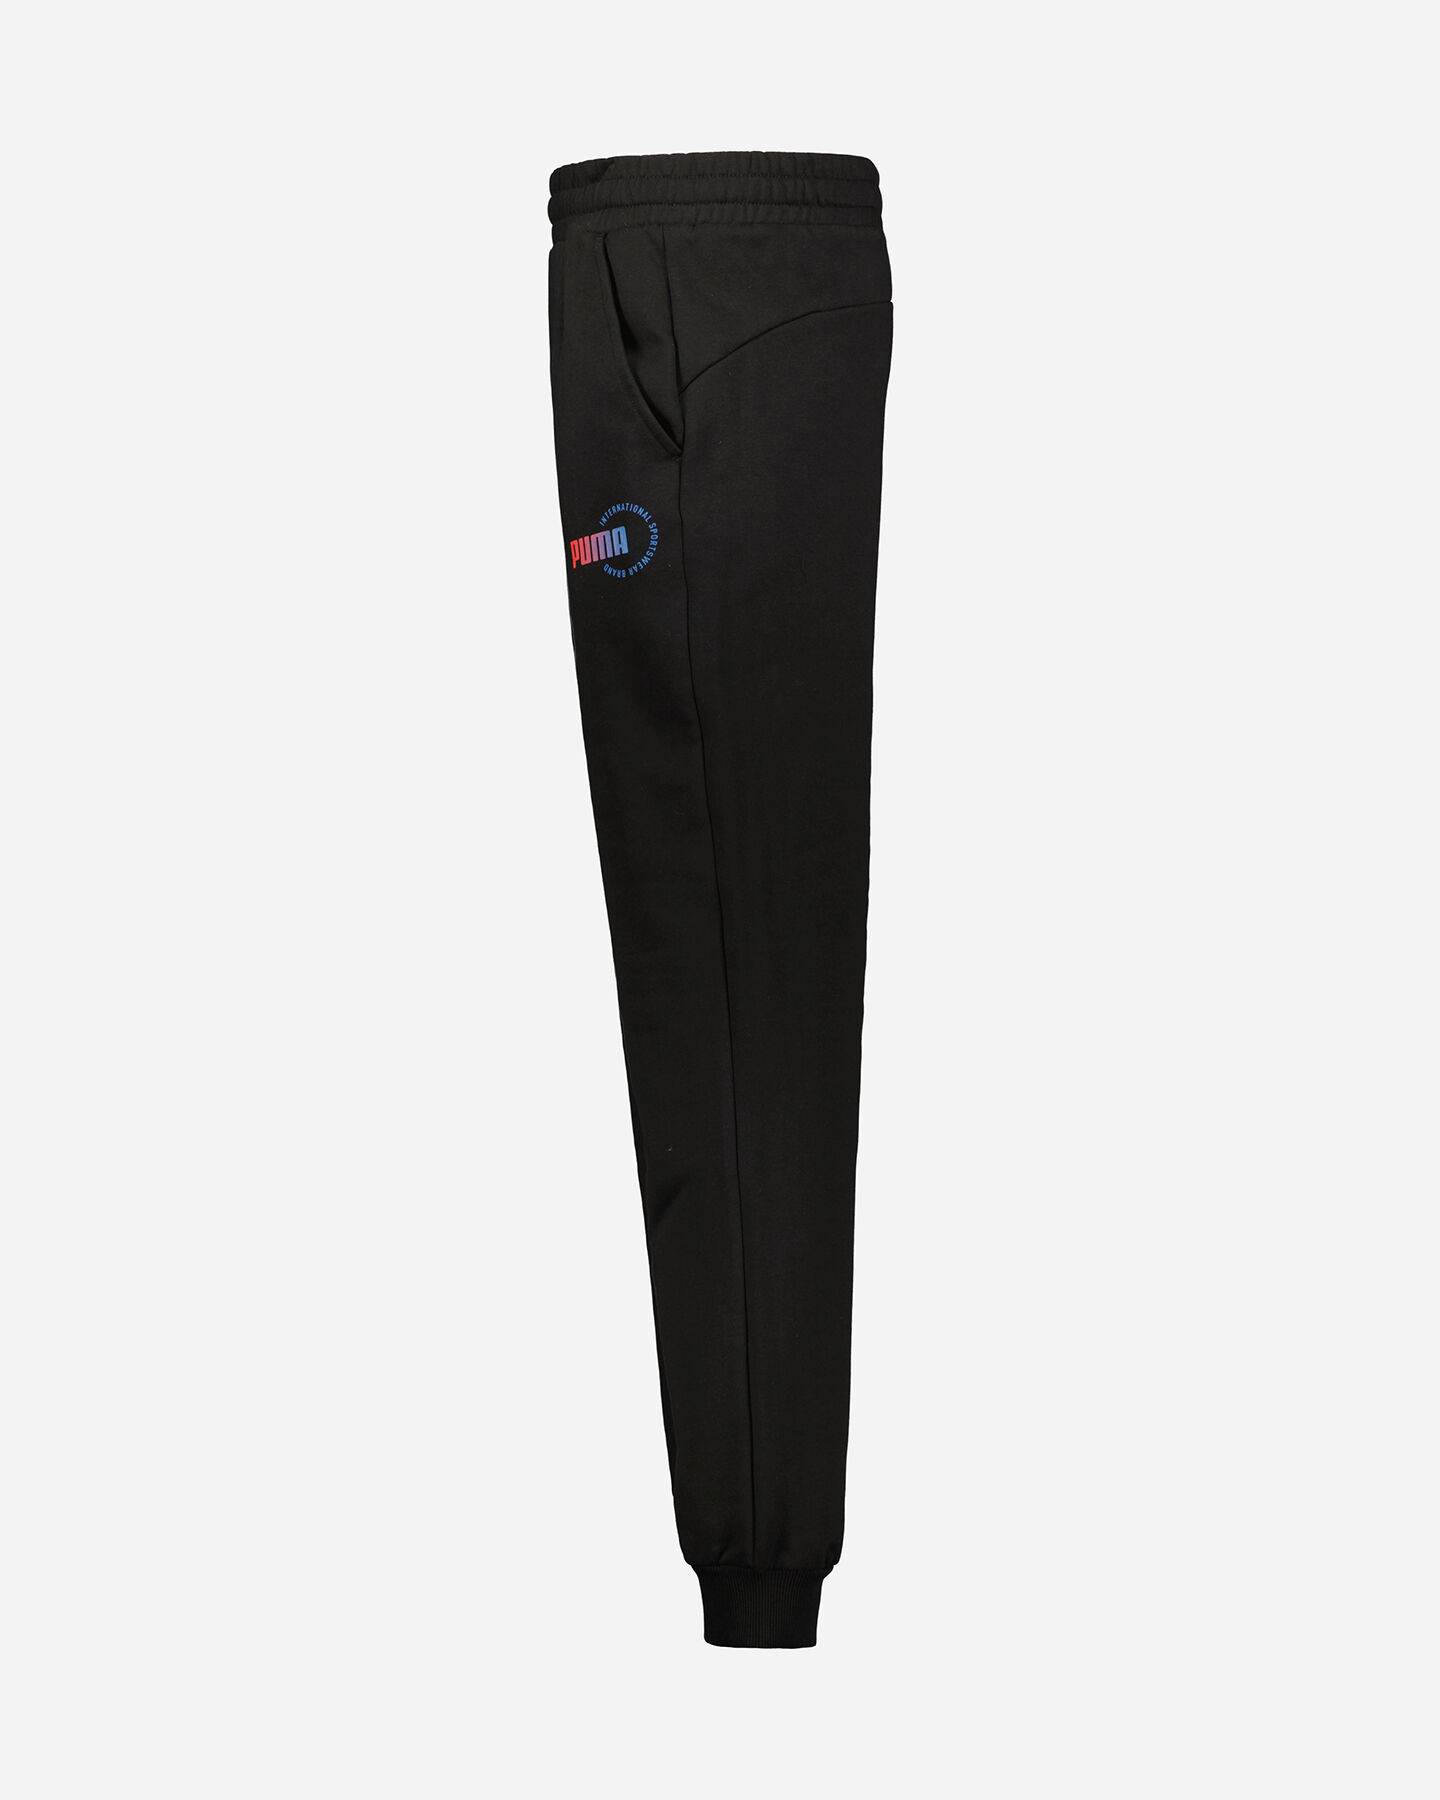  Pantalone PUMA BLANK SLOGO M S5504773 scatto 1